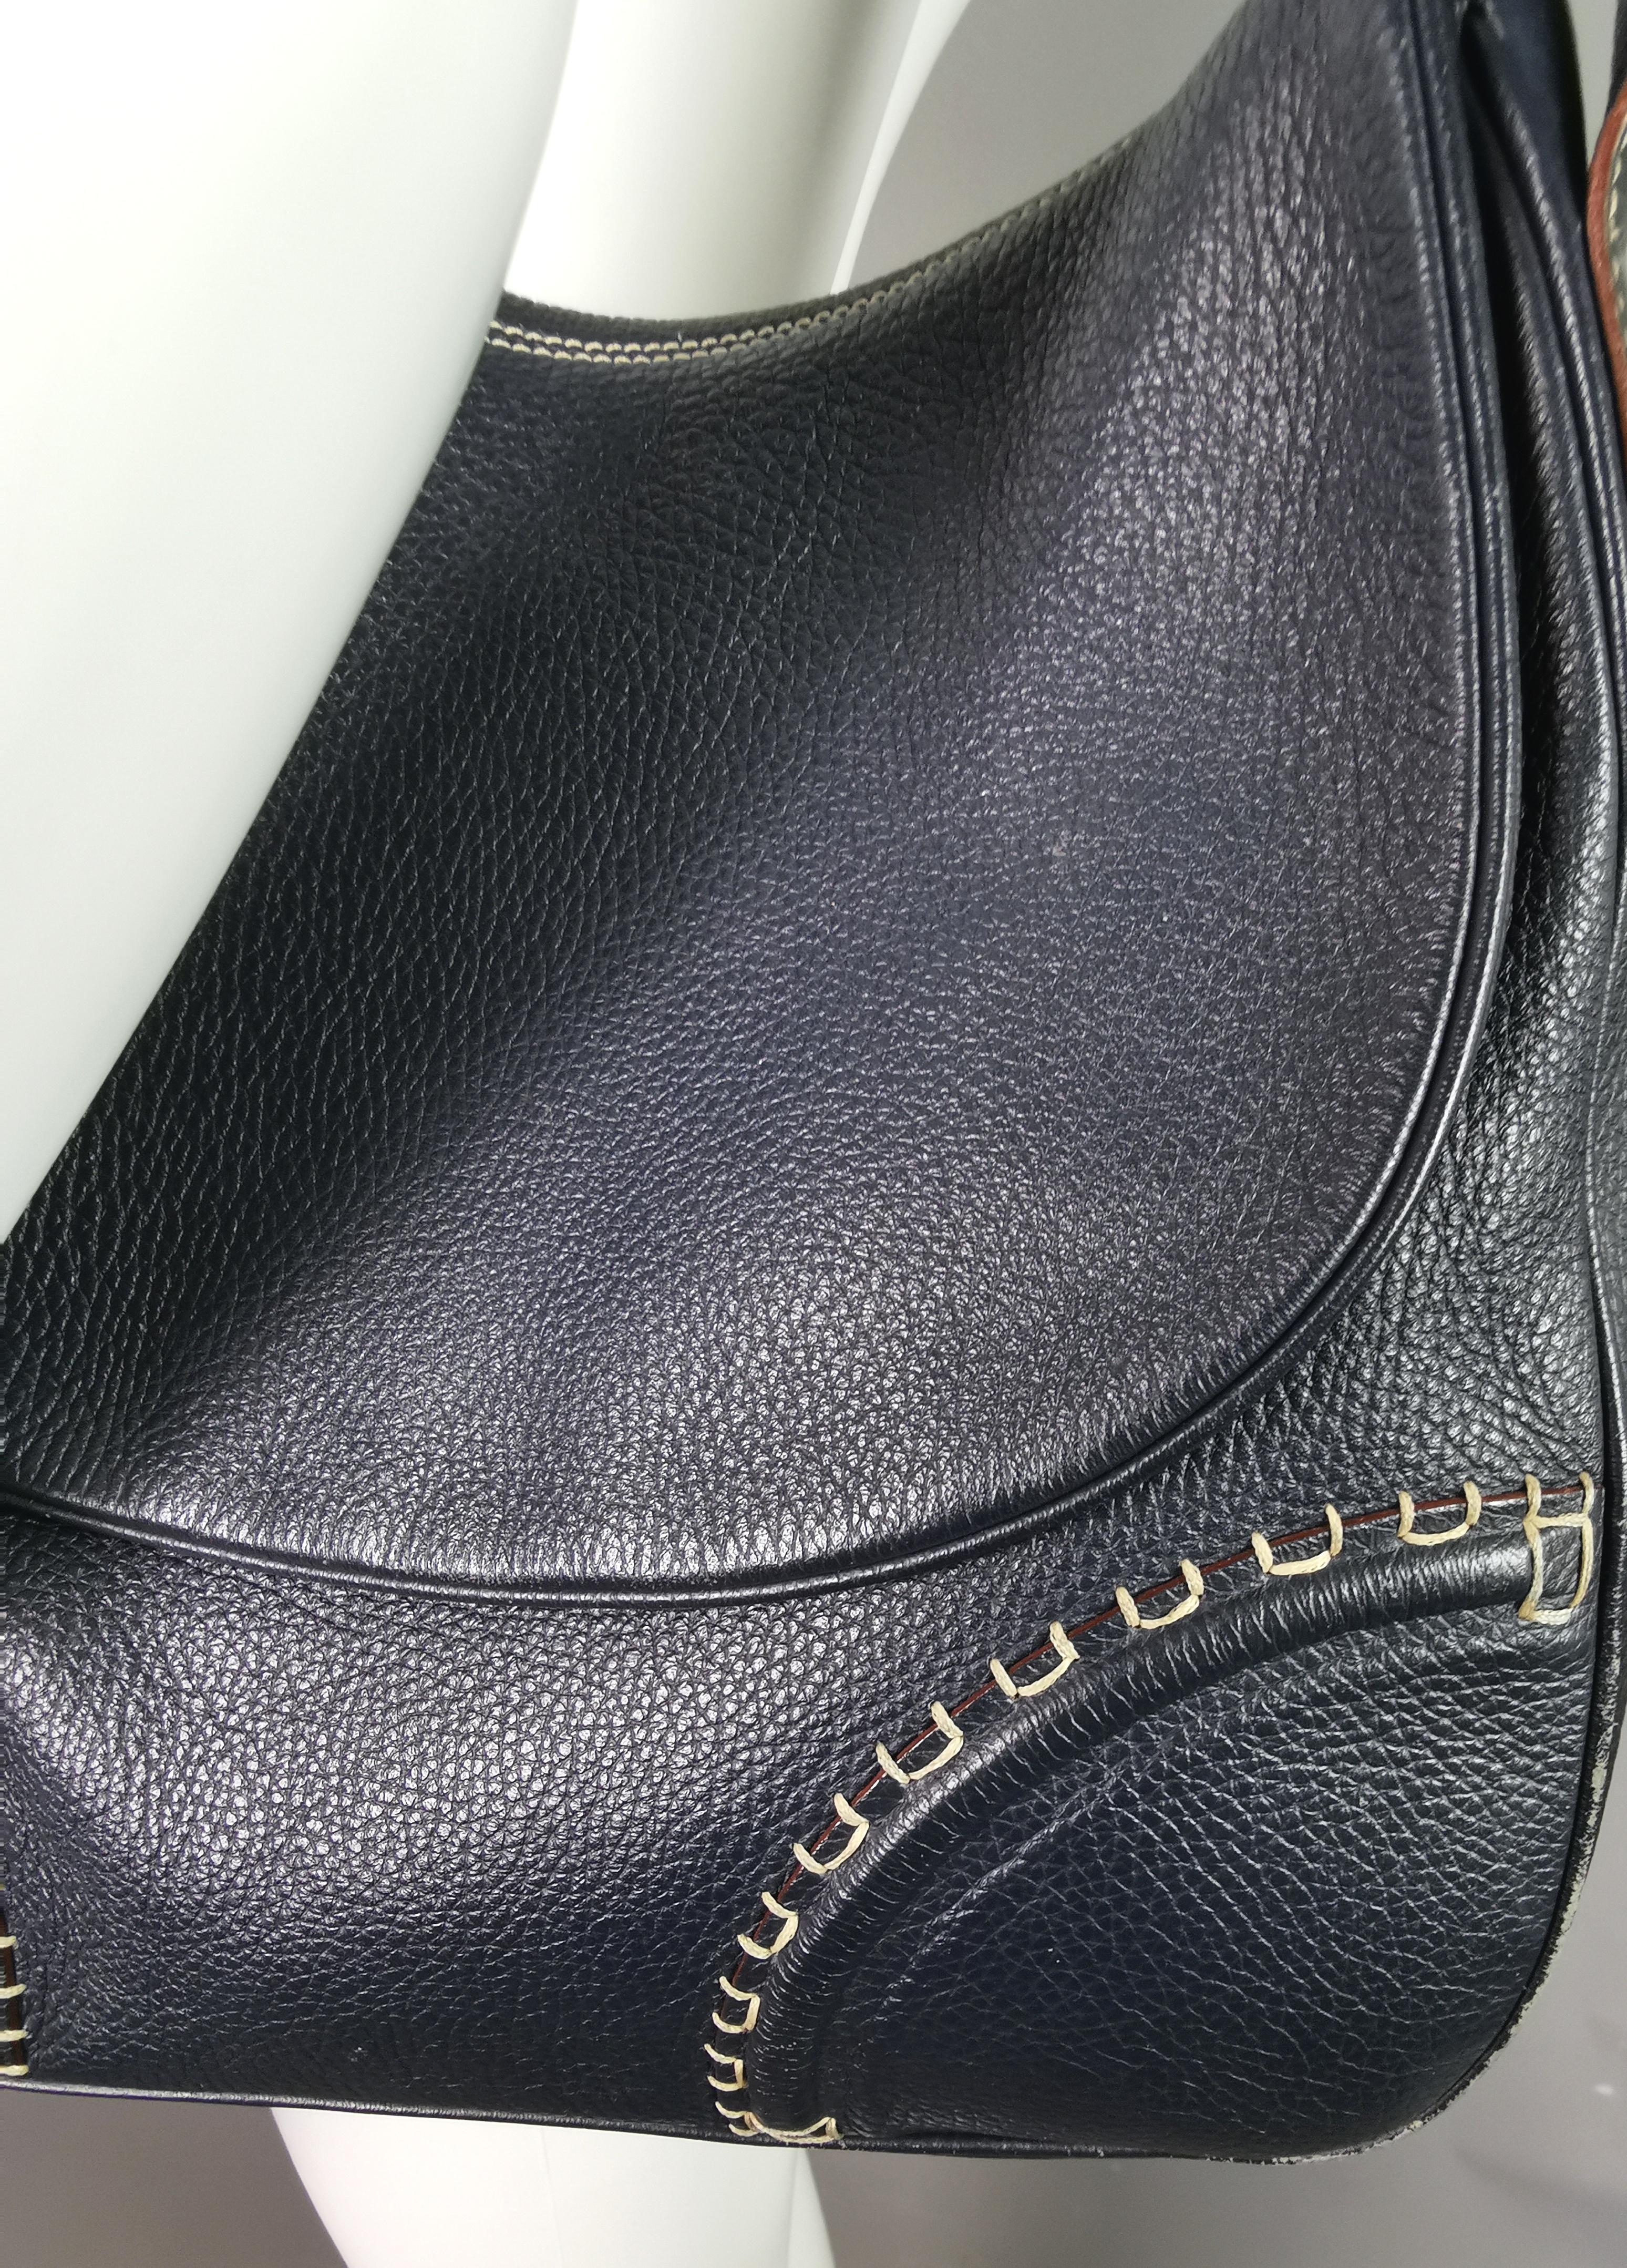 Women's Burberry navy blue pebble leather handbag, Shoulder bag 